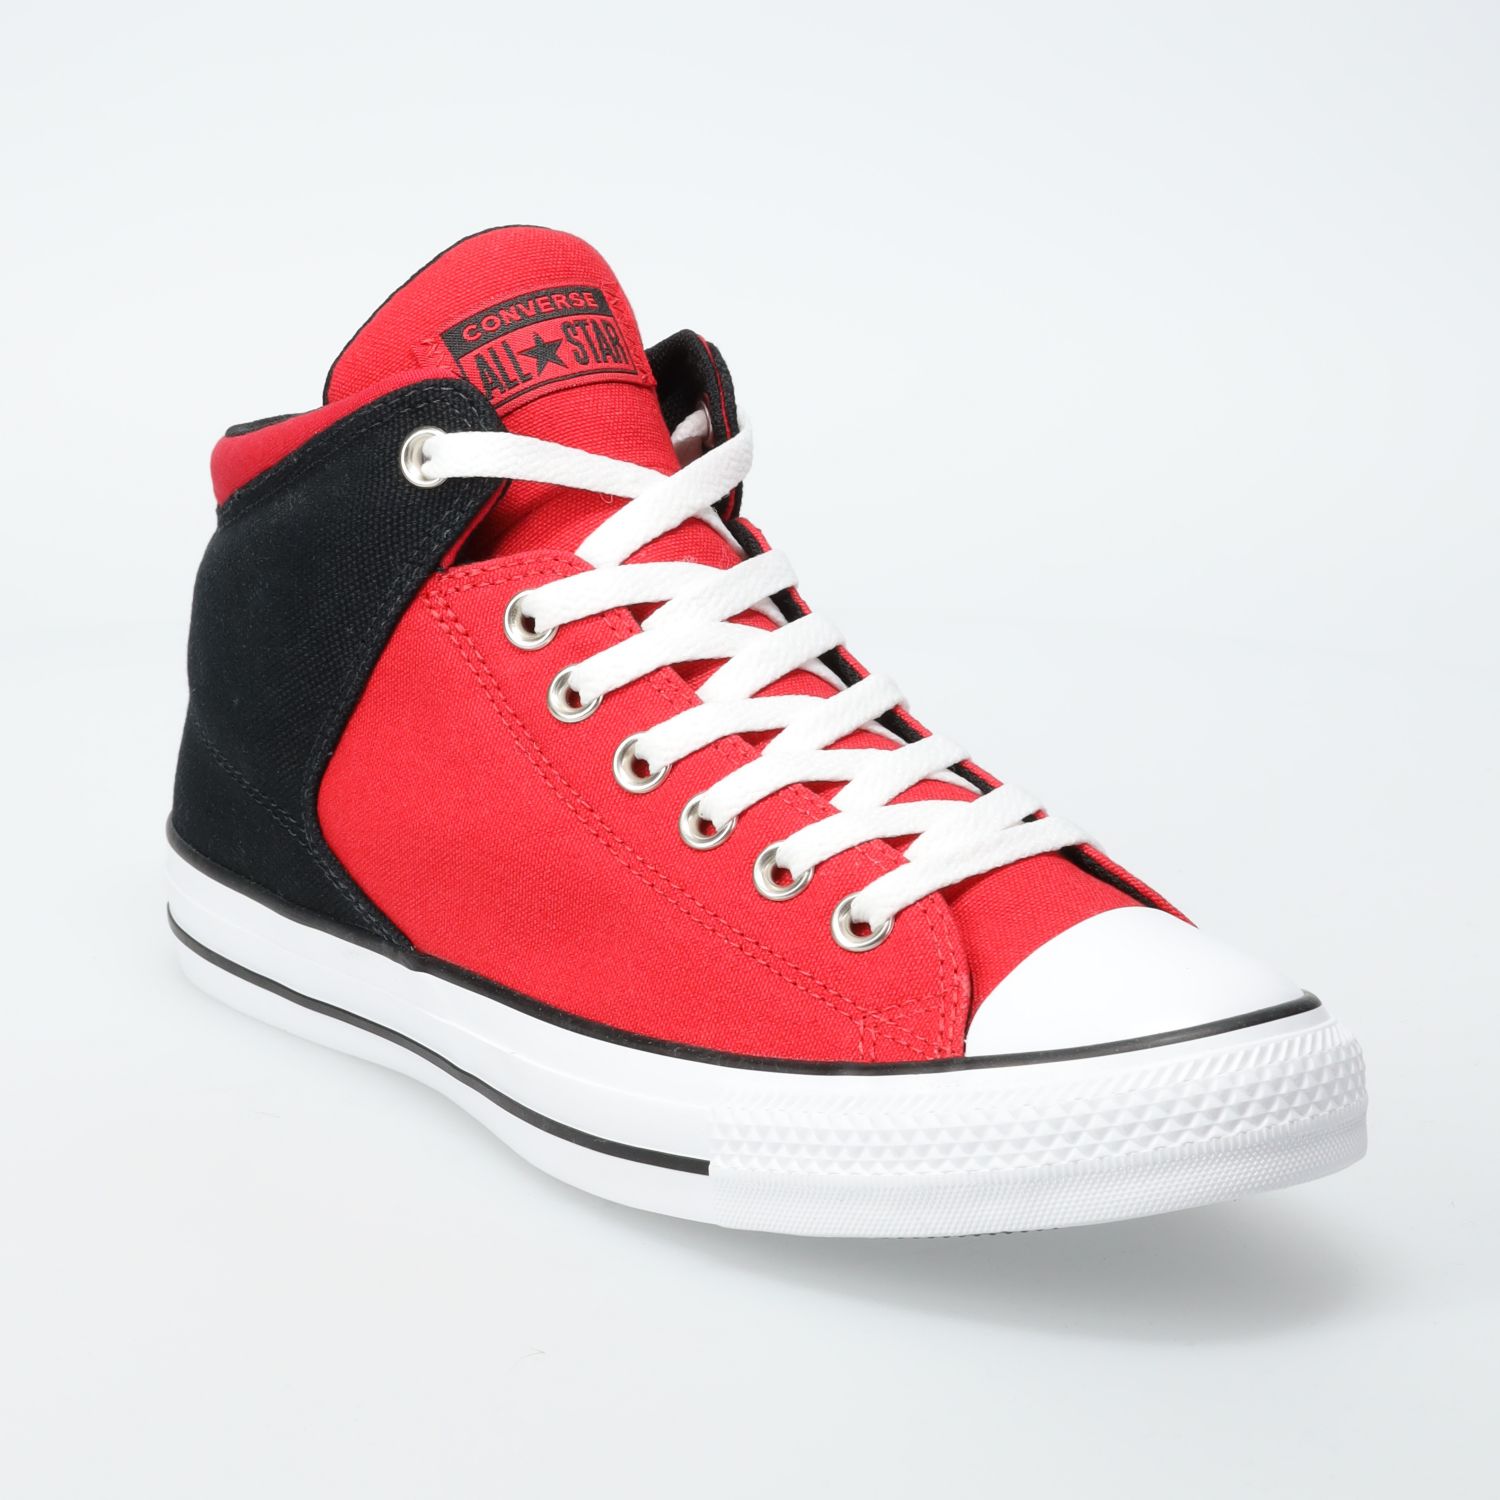 red converse shoes men